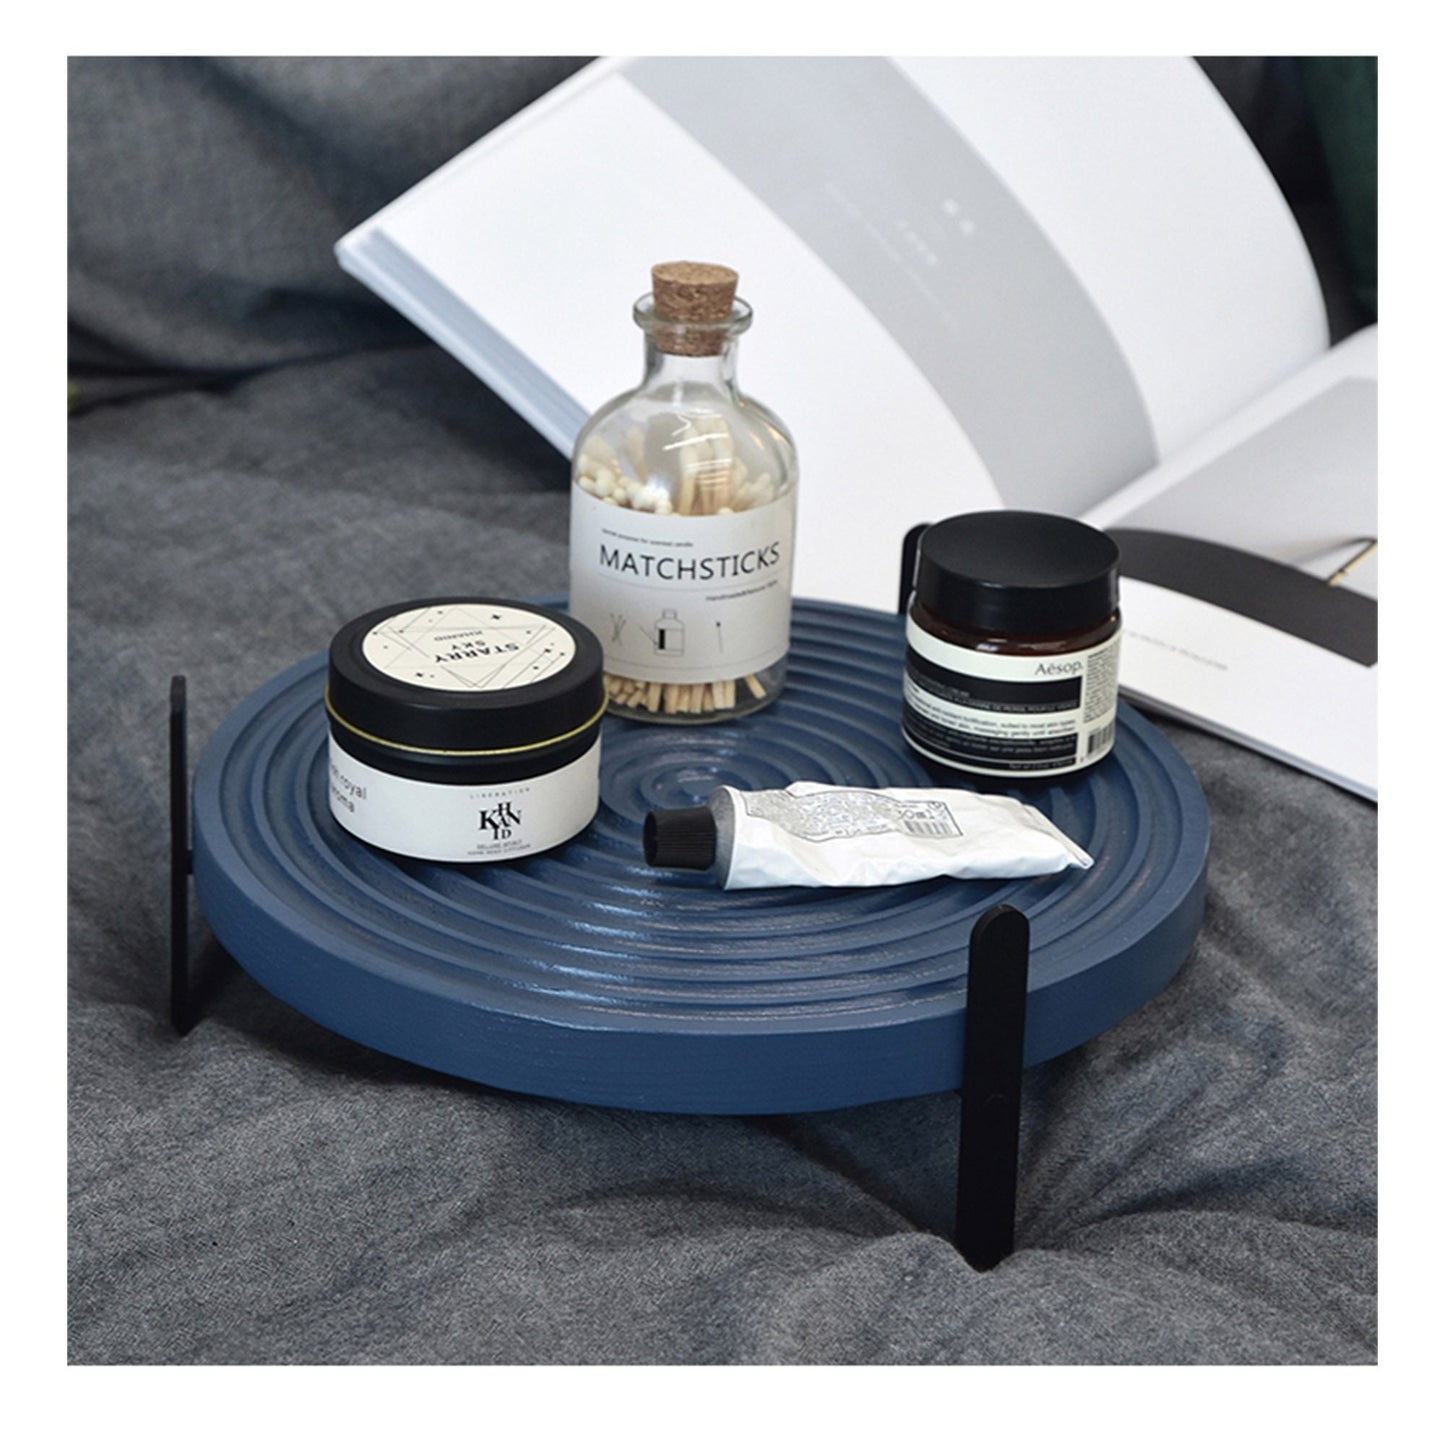 Decor tray| Coffee table tray | Minimalist Catch All Tray| Candle tray | Gift for him |Display tray |Perfume tray |Makeup tray |Jewelry tray